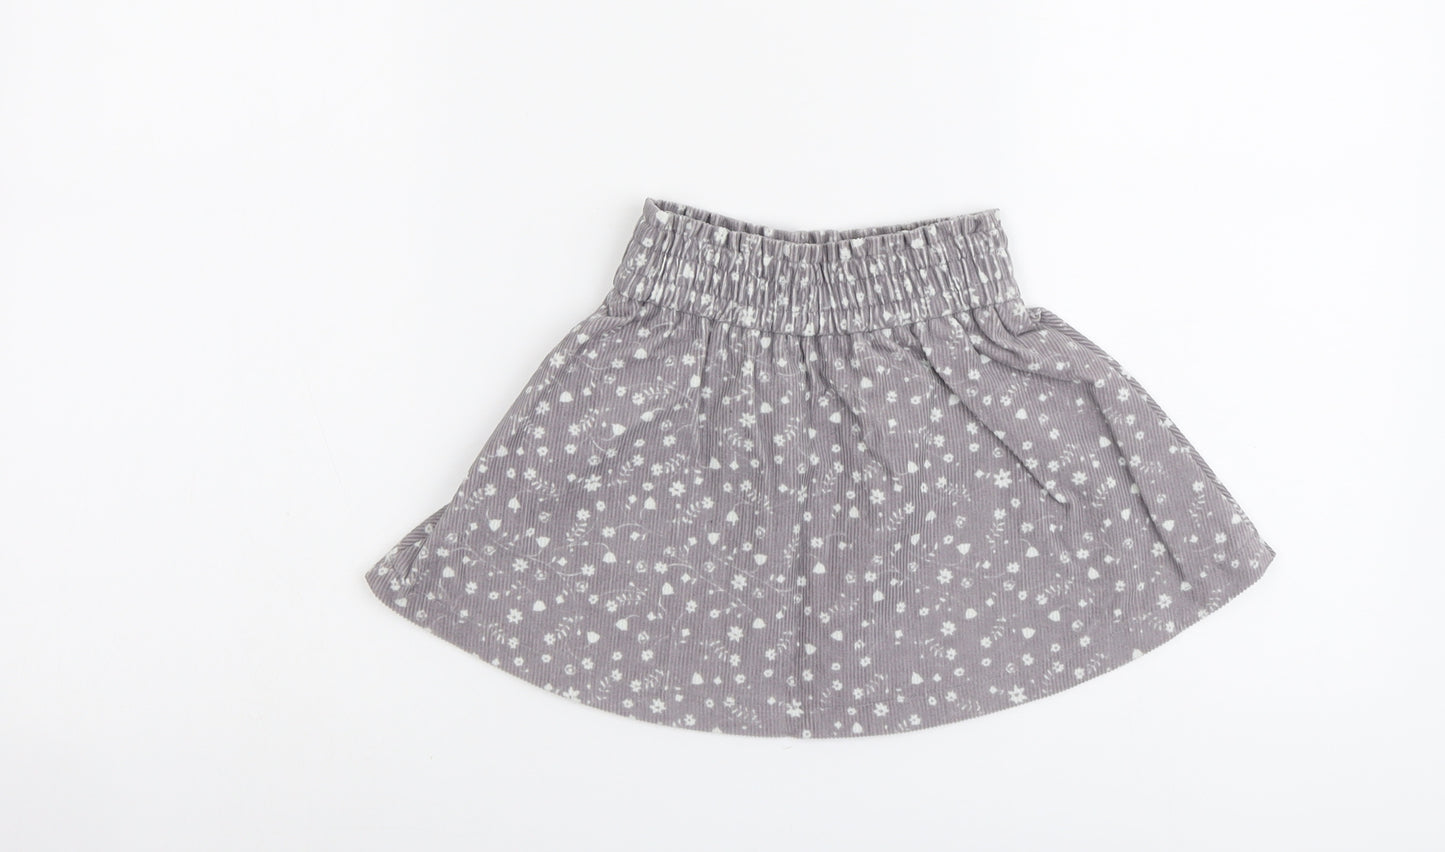 Nutmeg Girls Grey Geometric Cotton A-Line Skirt Size 3-4 Years Regular Pull On